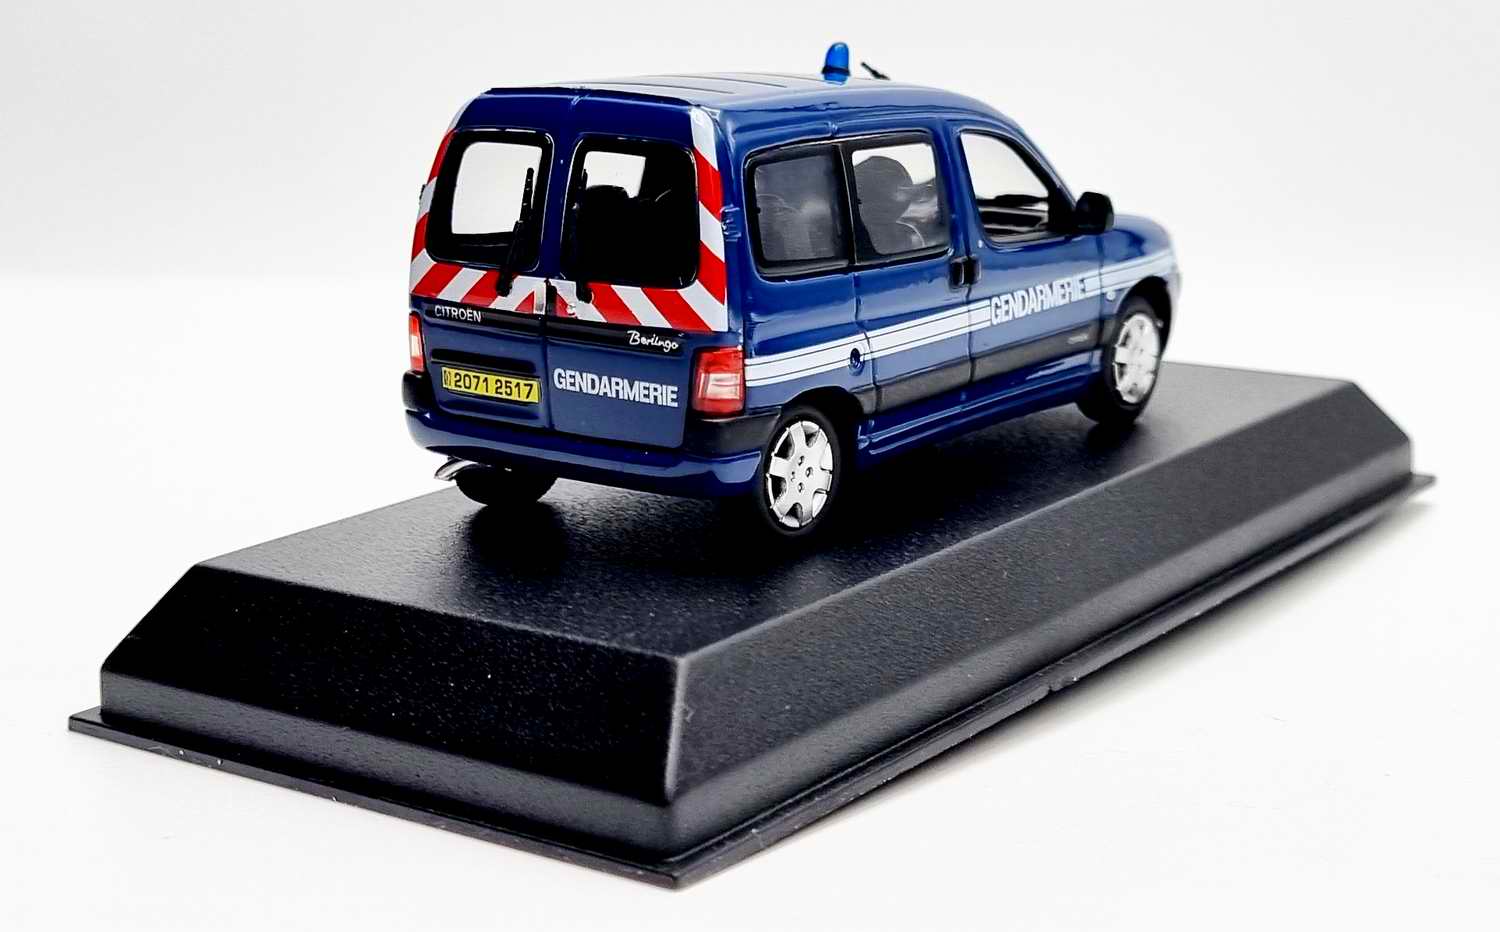 Miniaturauto CITROENBerlingo Gendarmerie 2007 1/43 Norev